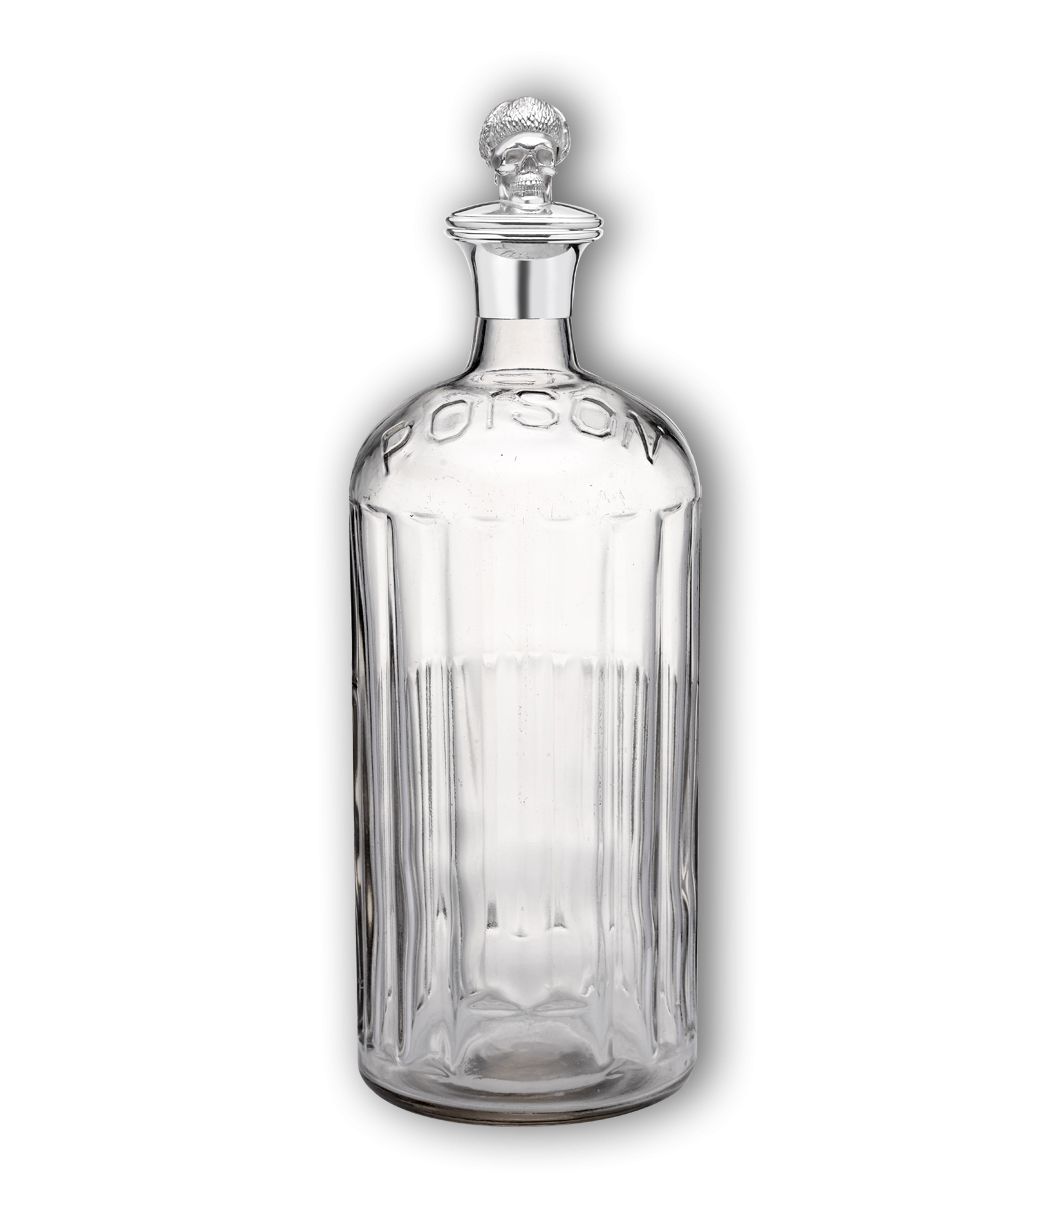 Bottle PNG image, free download image of bottle    图片编号:2059